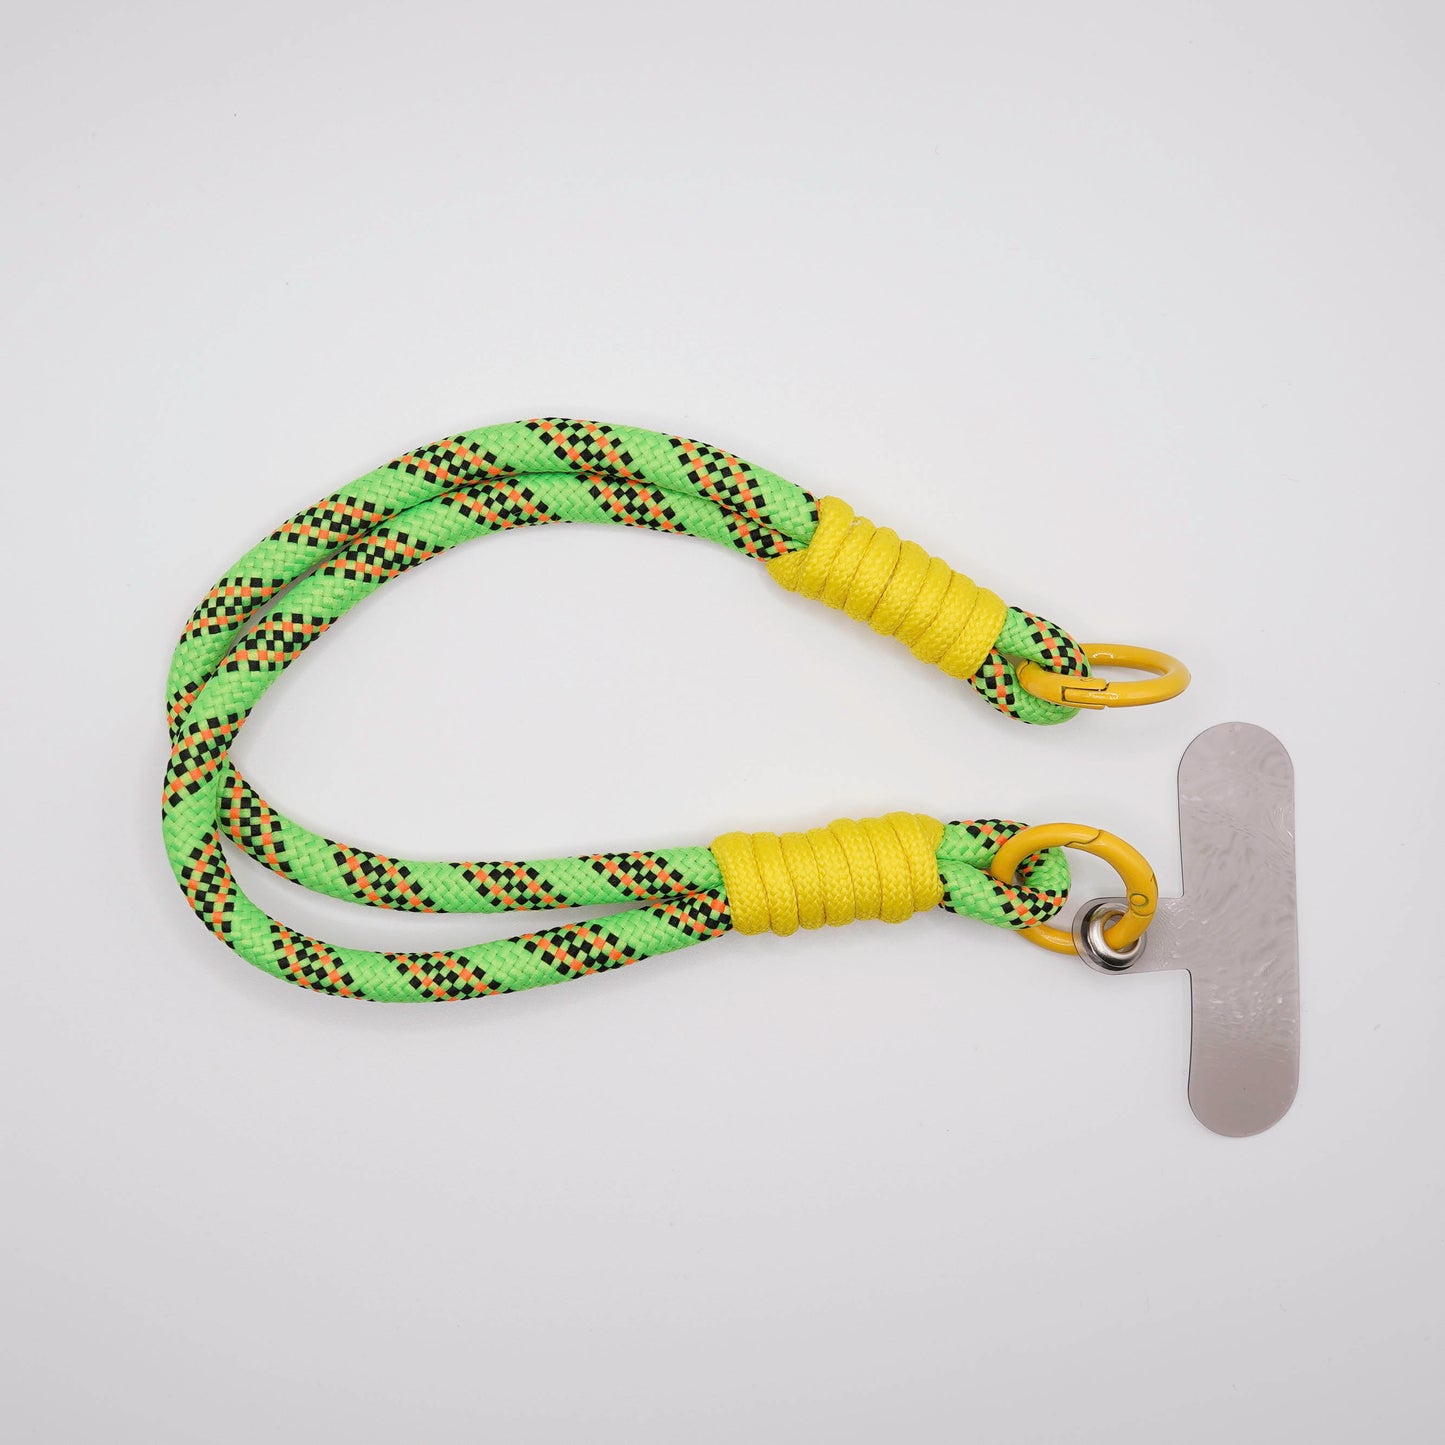 Green and Yellow wrist bracelet